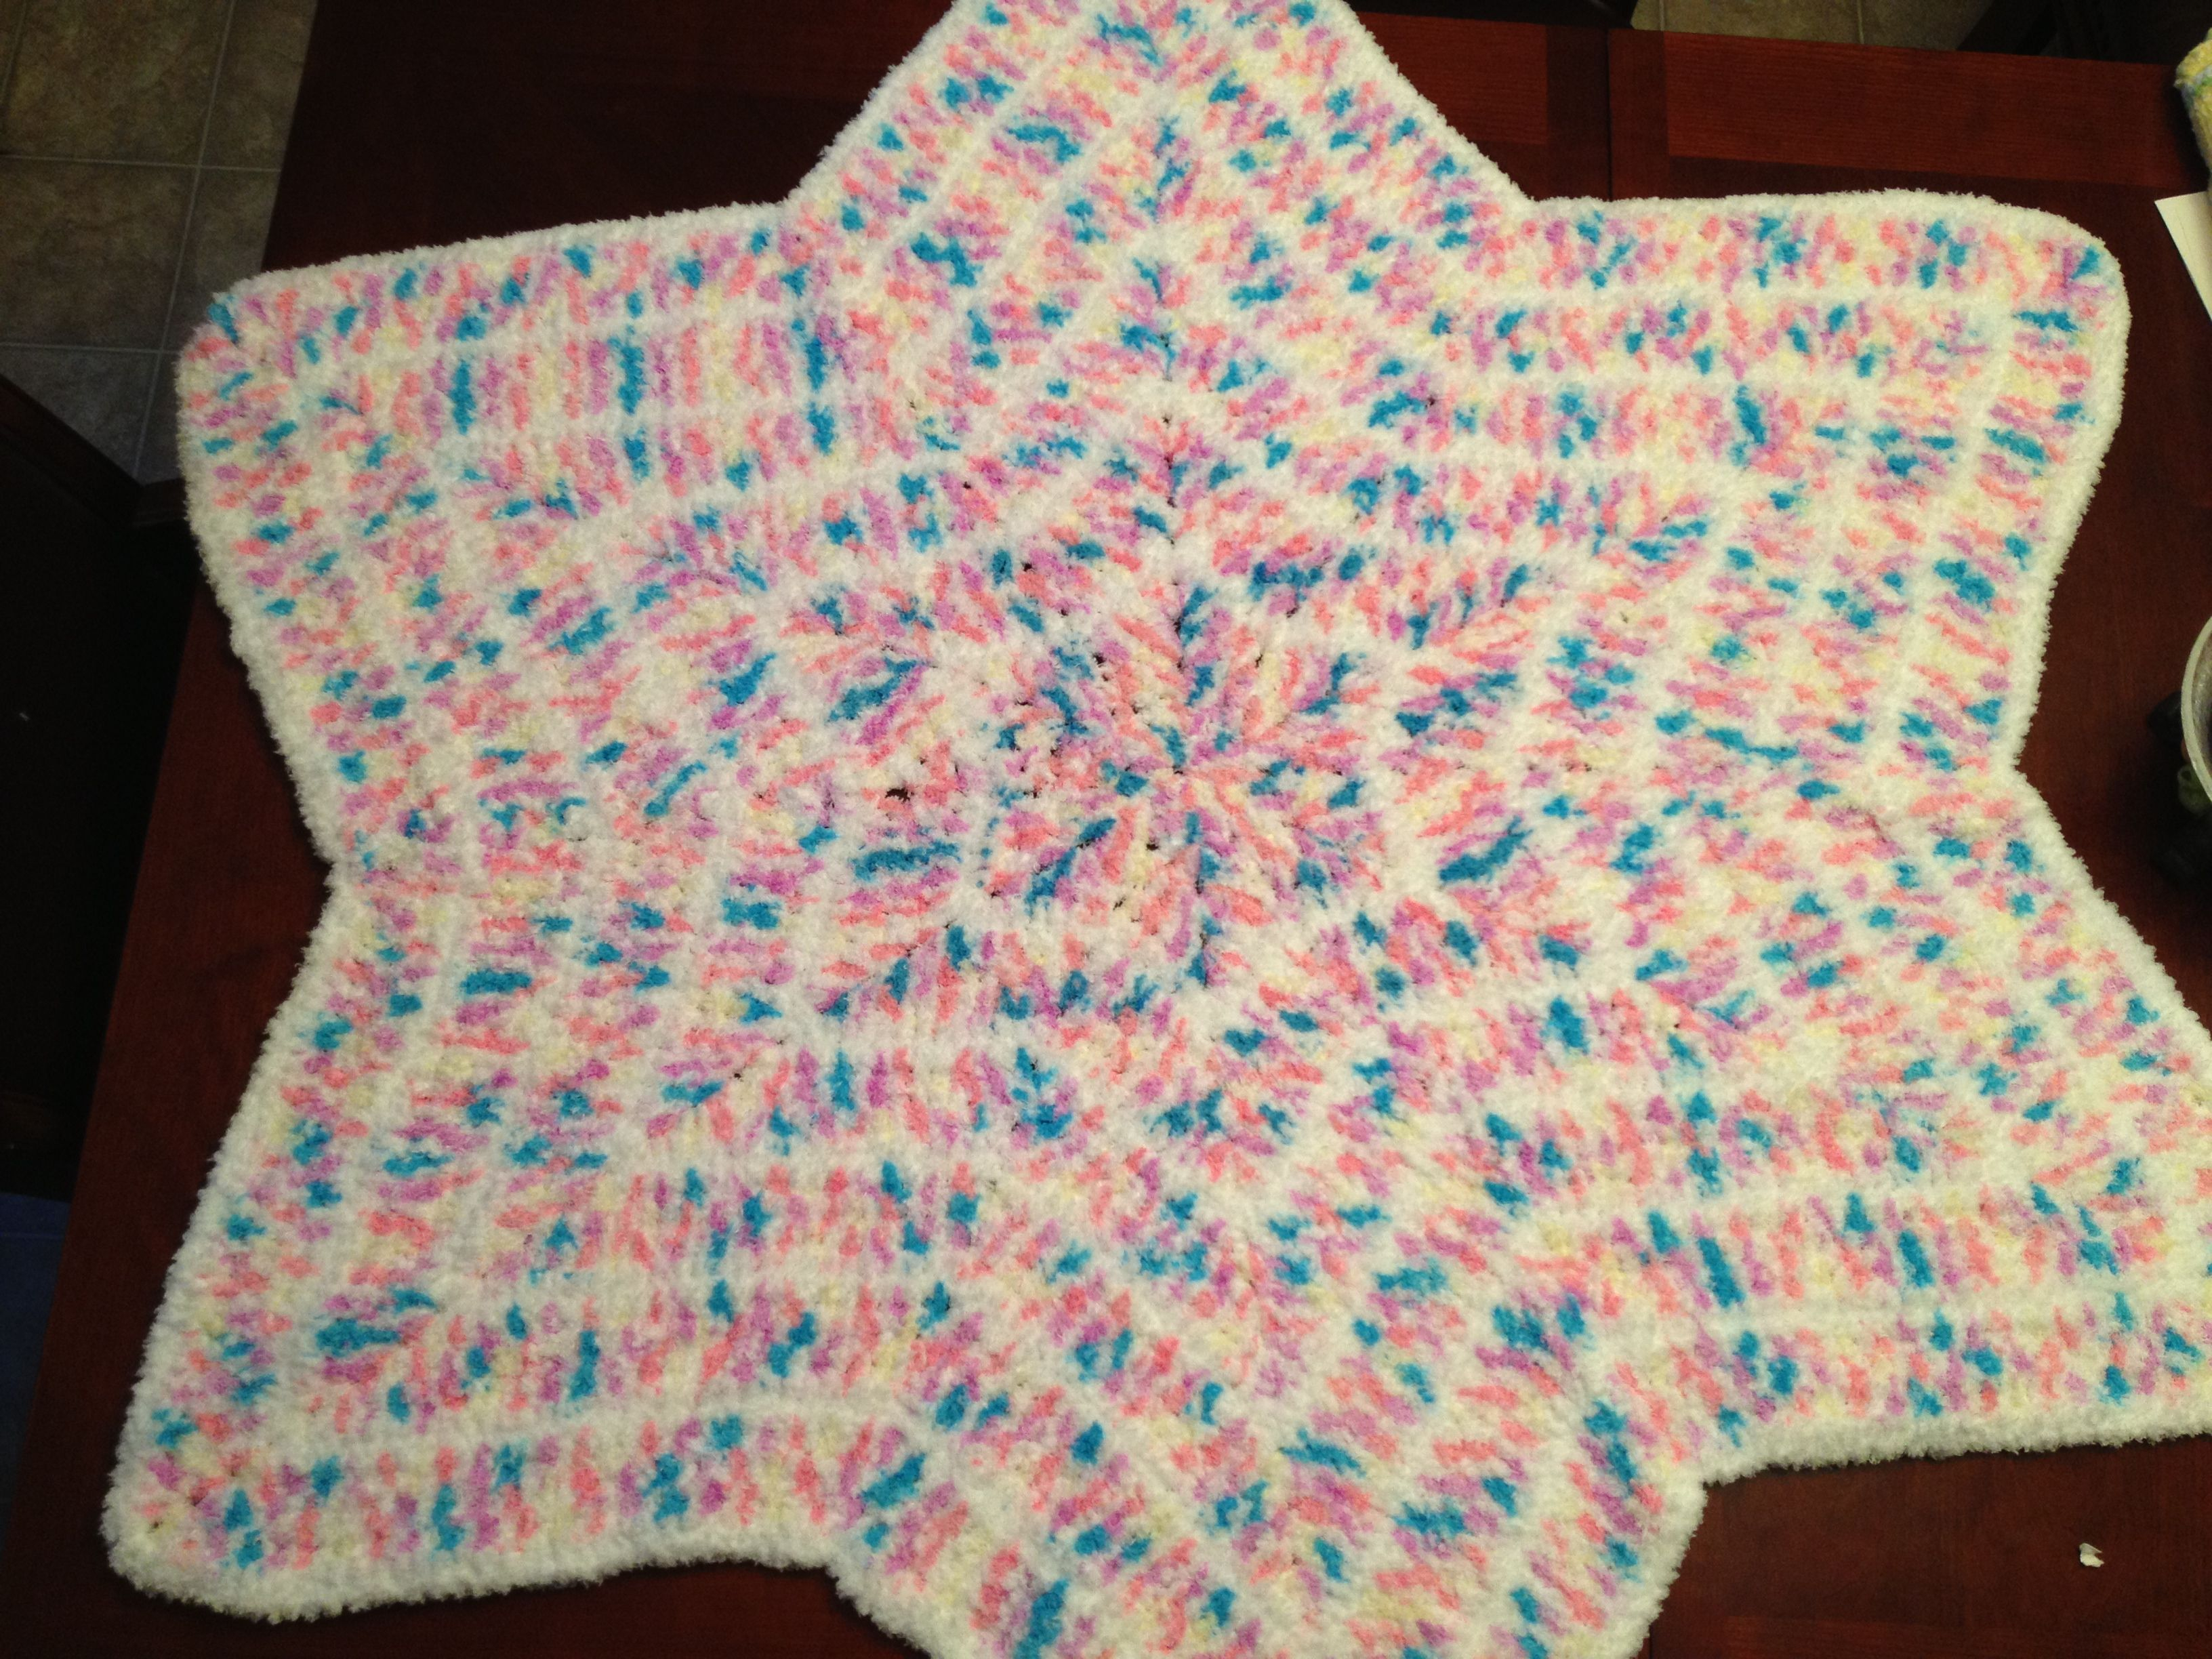 Star Shaped Crochet Blanket Pattern Finish A Star Shaped Ba Blanket Using Bernat Pipsqueak Yarn This